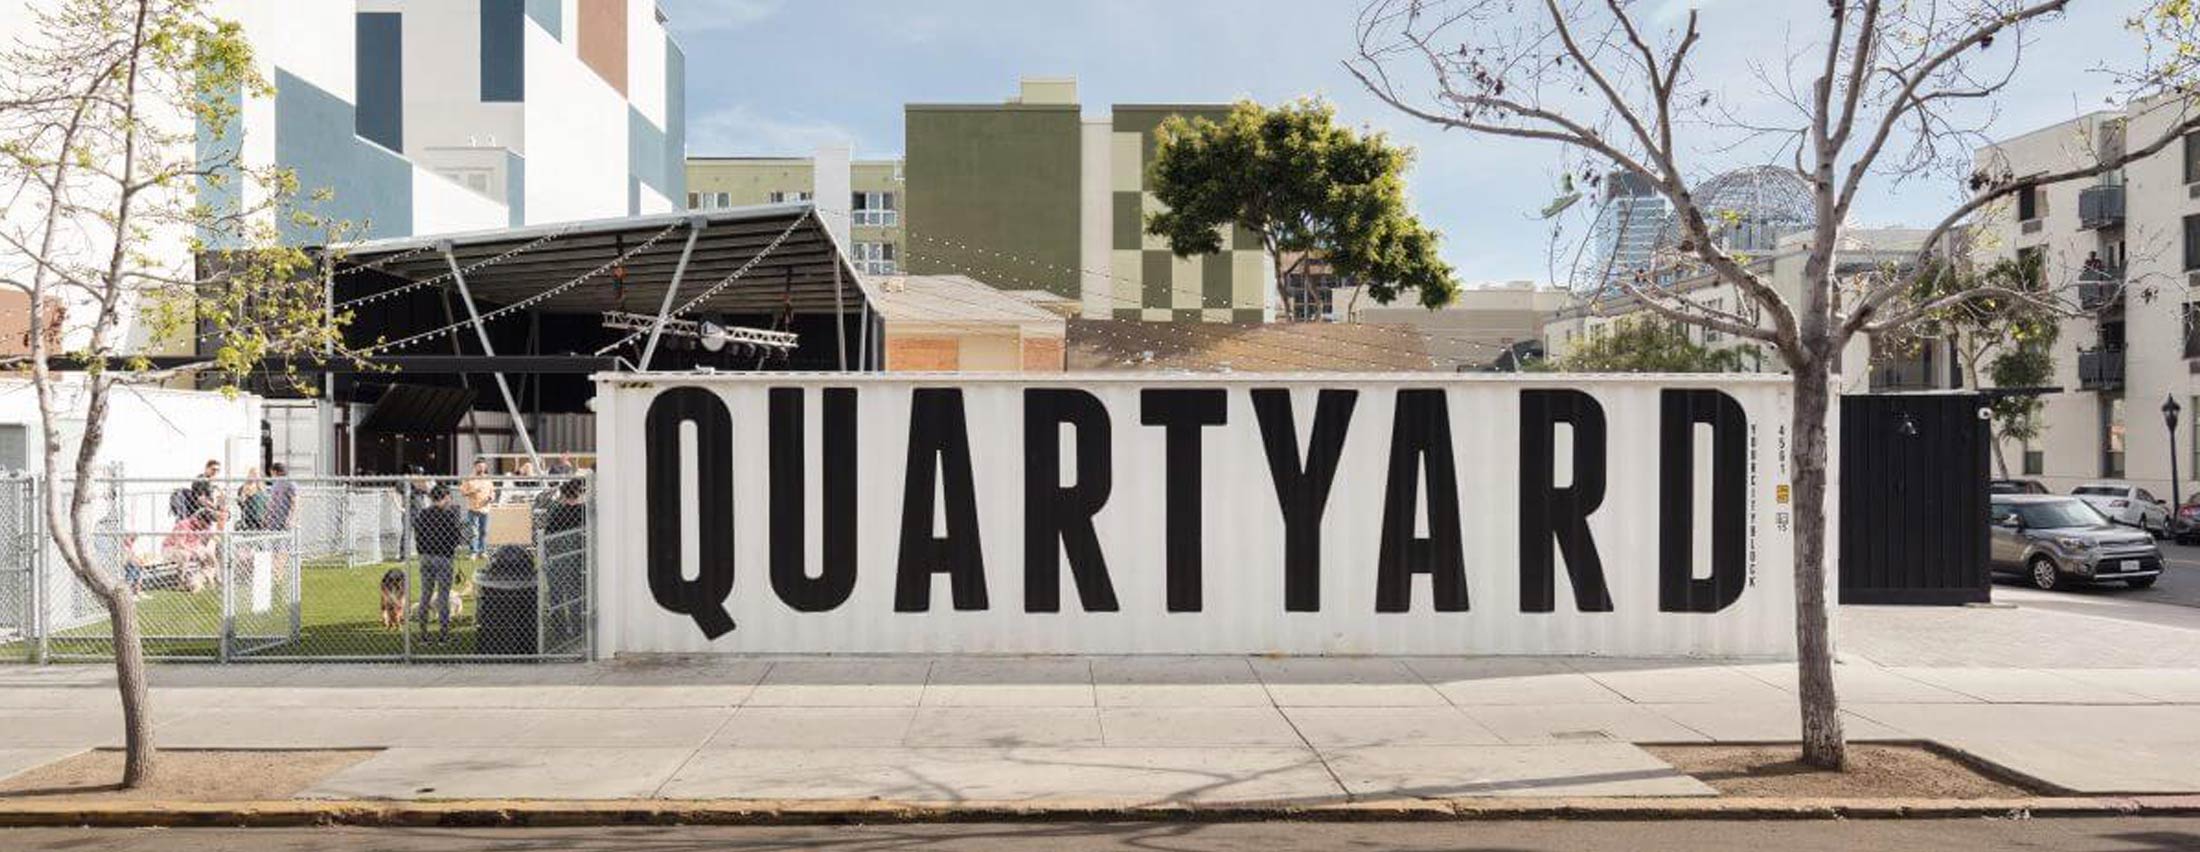 Quartyard | San Diego Event Space